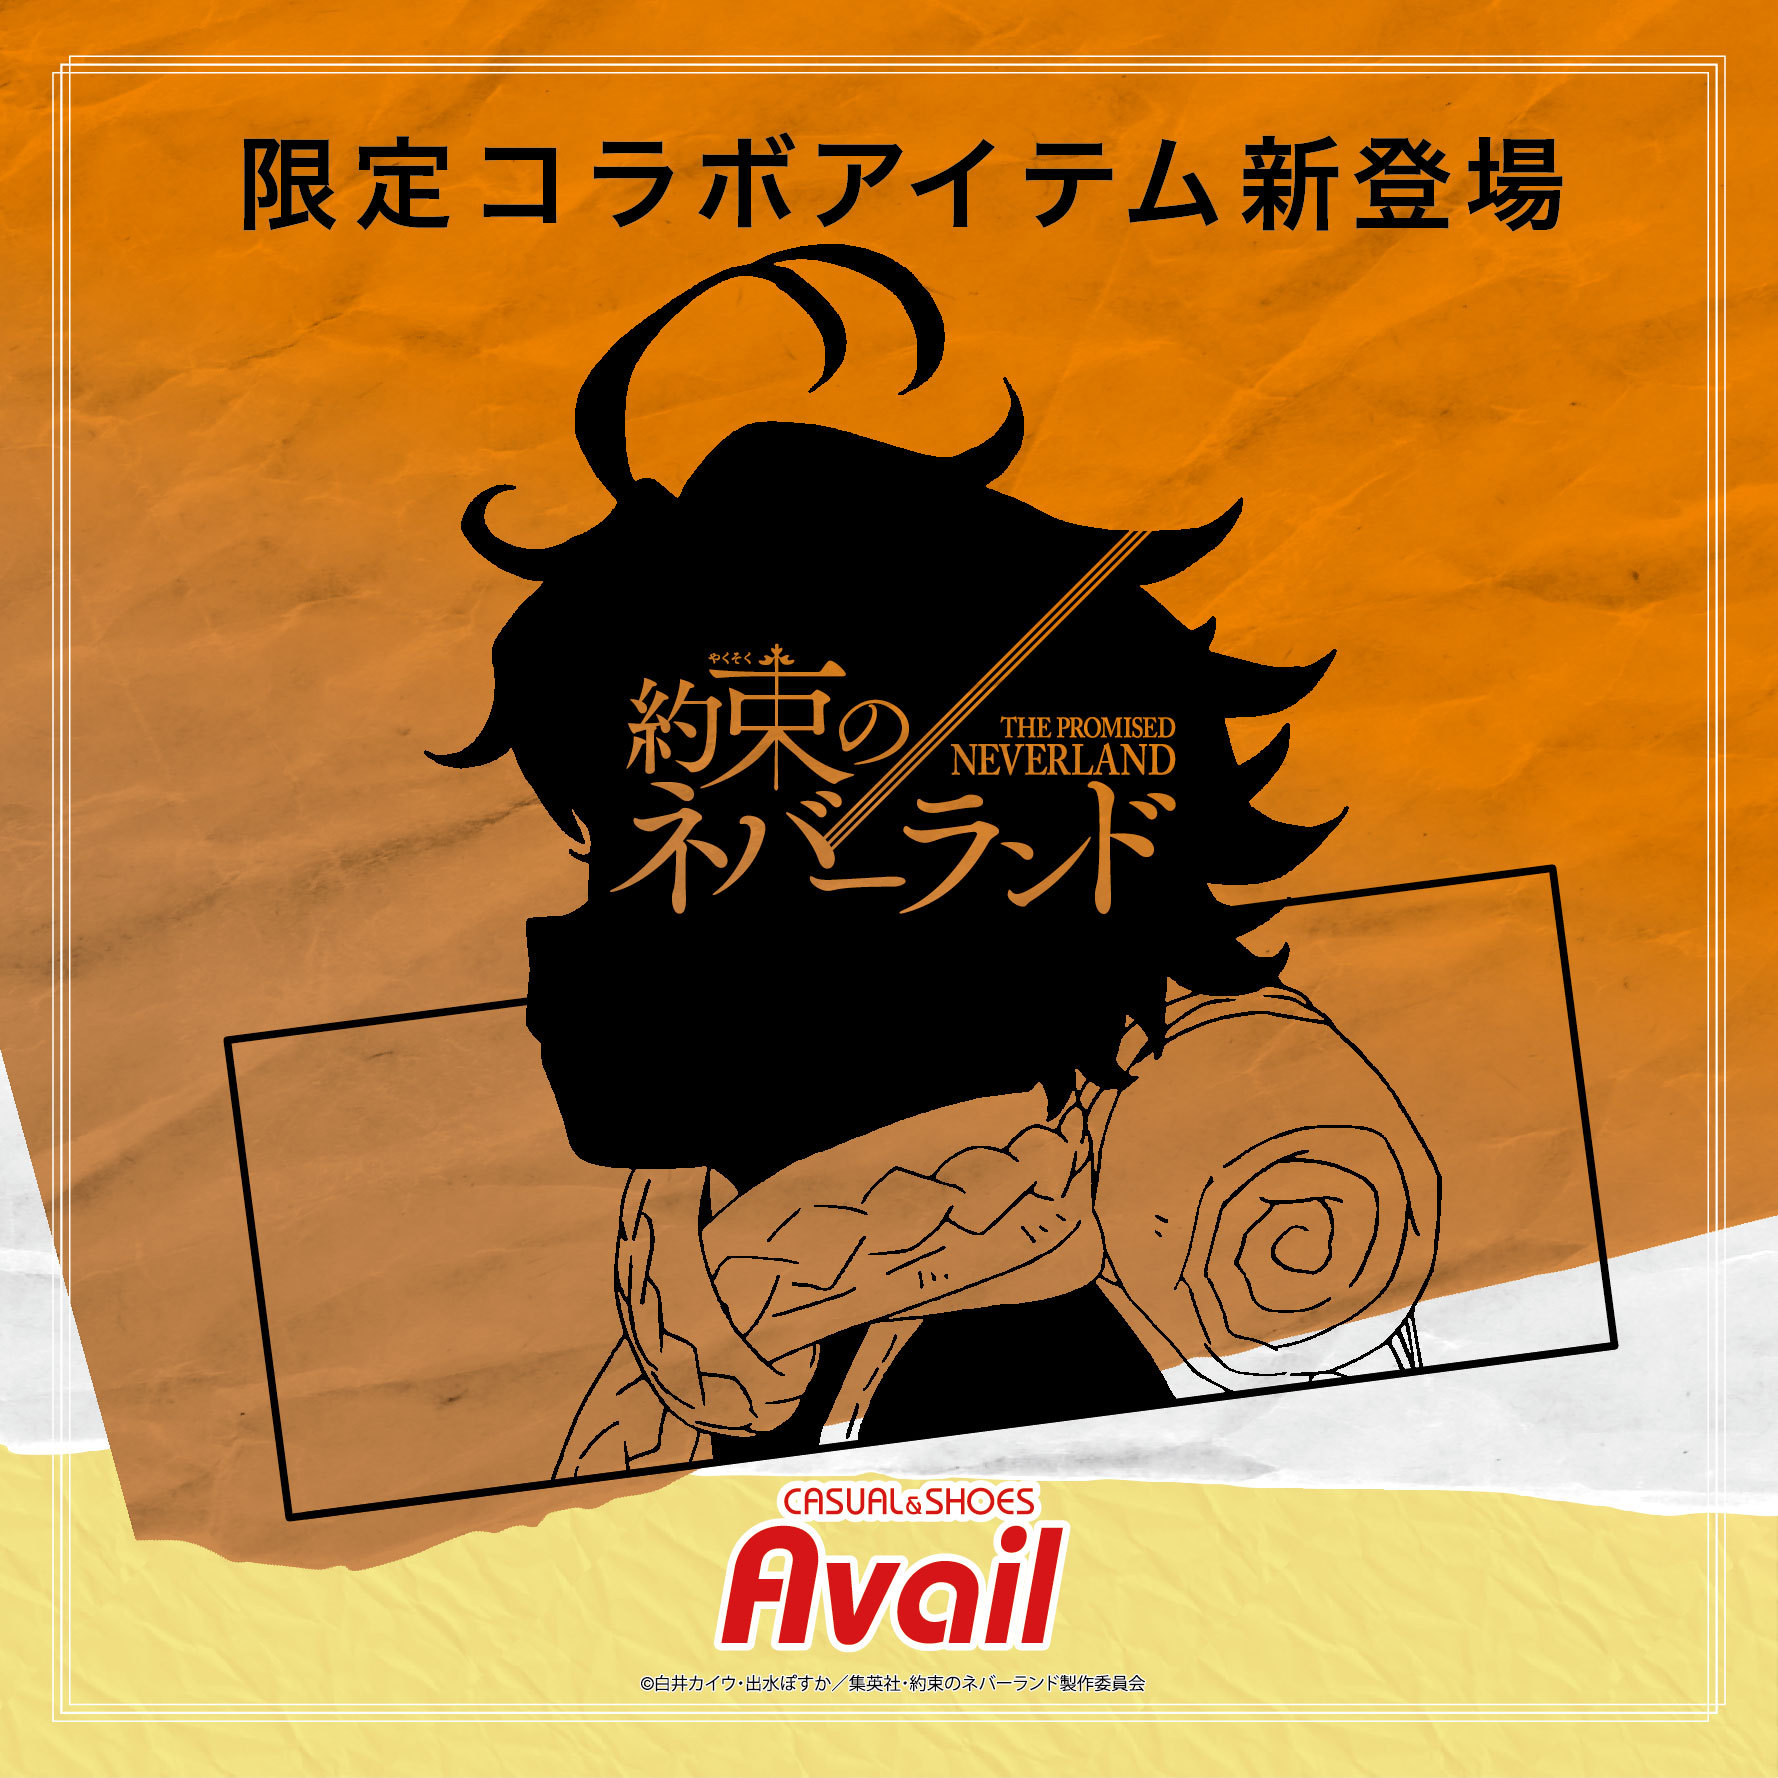 TVアニメ「約束のネバーランド」×「Avail」